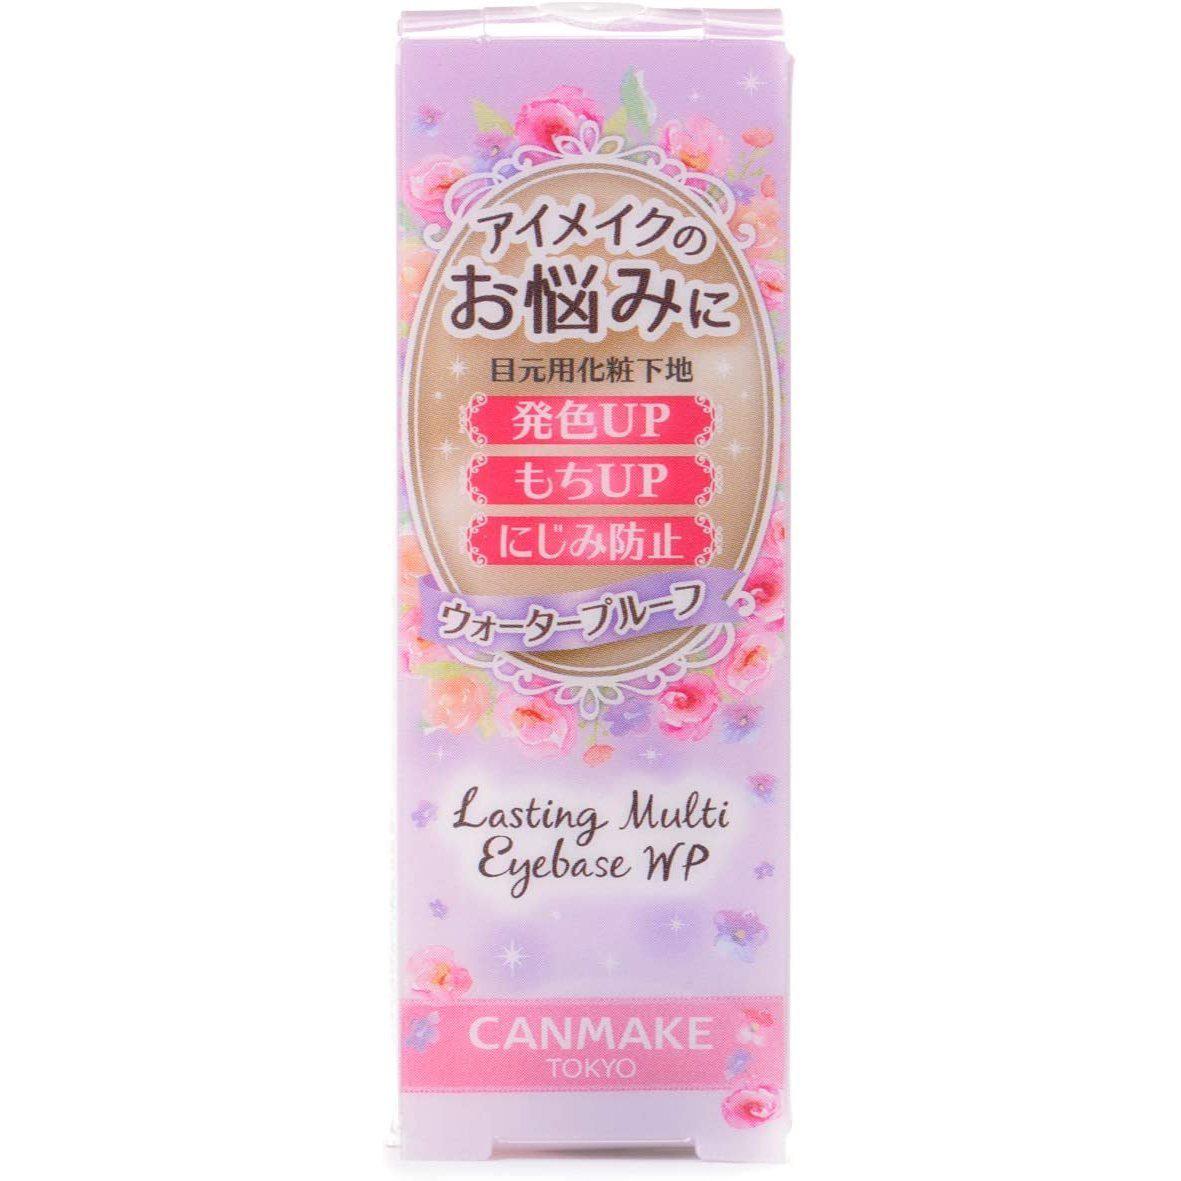 Canmake Lasting Multi Eyebase WP Eyeshadow Makeup 8g - YOYO JAPAN